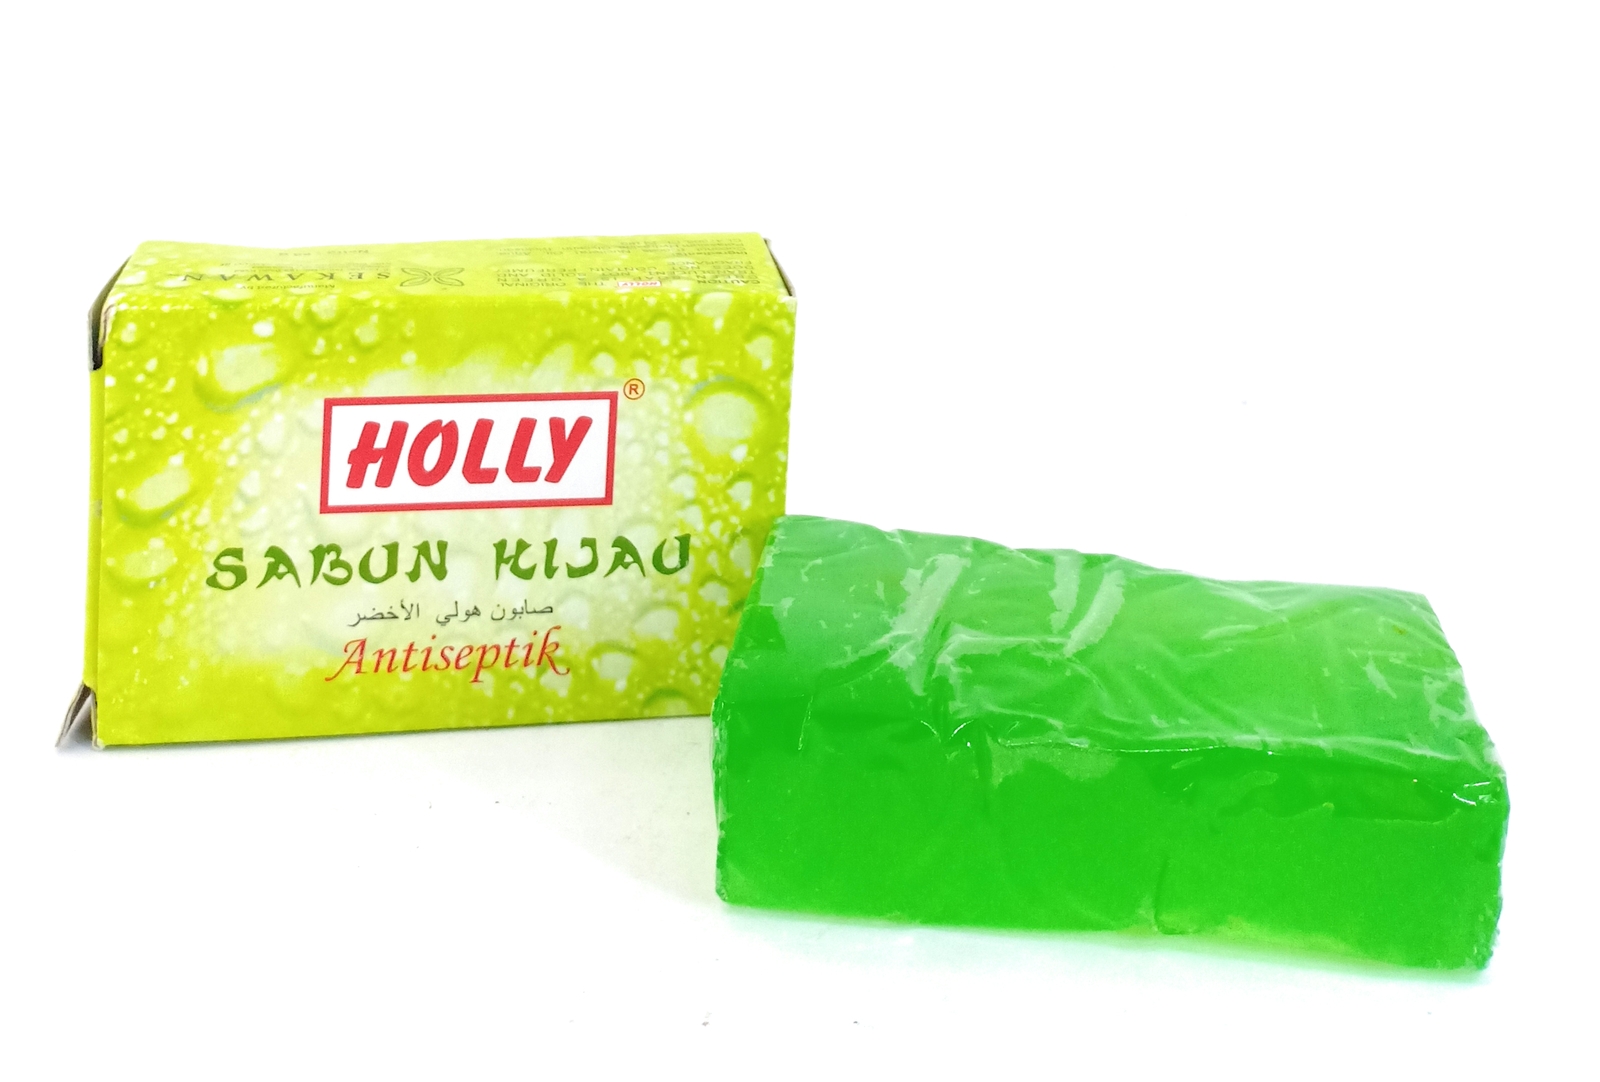 Holly Sabun Hijau Green Soap Antiseptic, 80 Gram (Pack of 3)